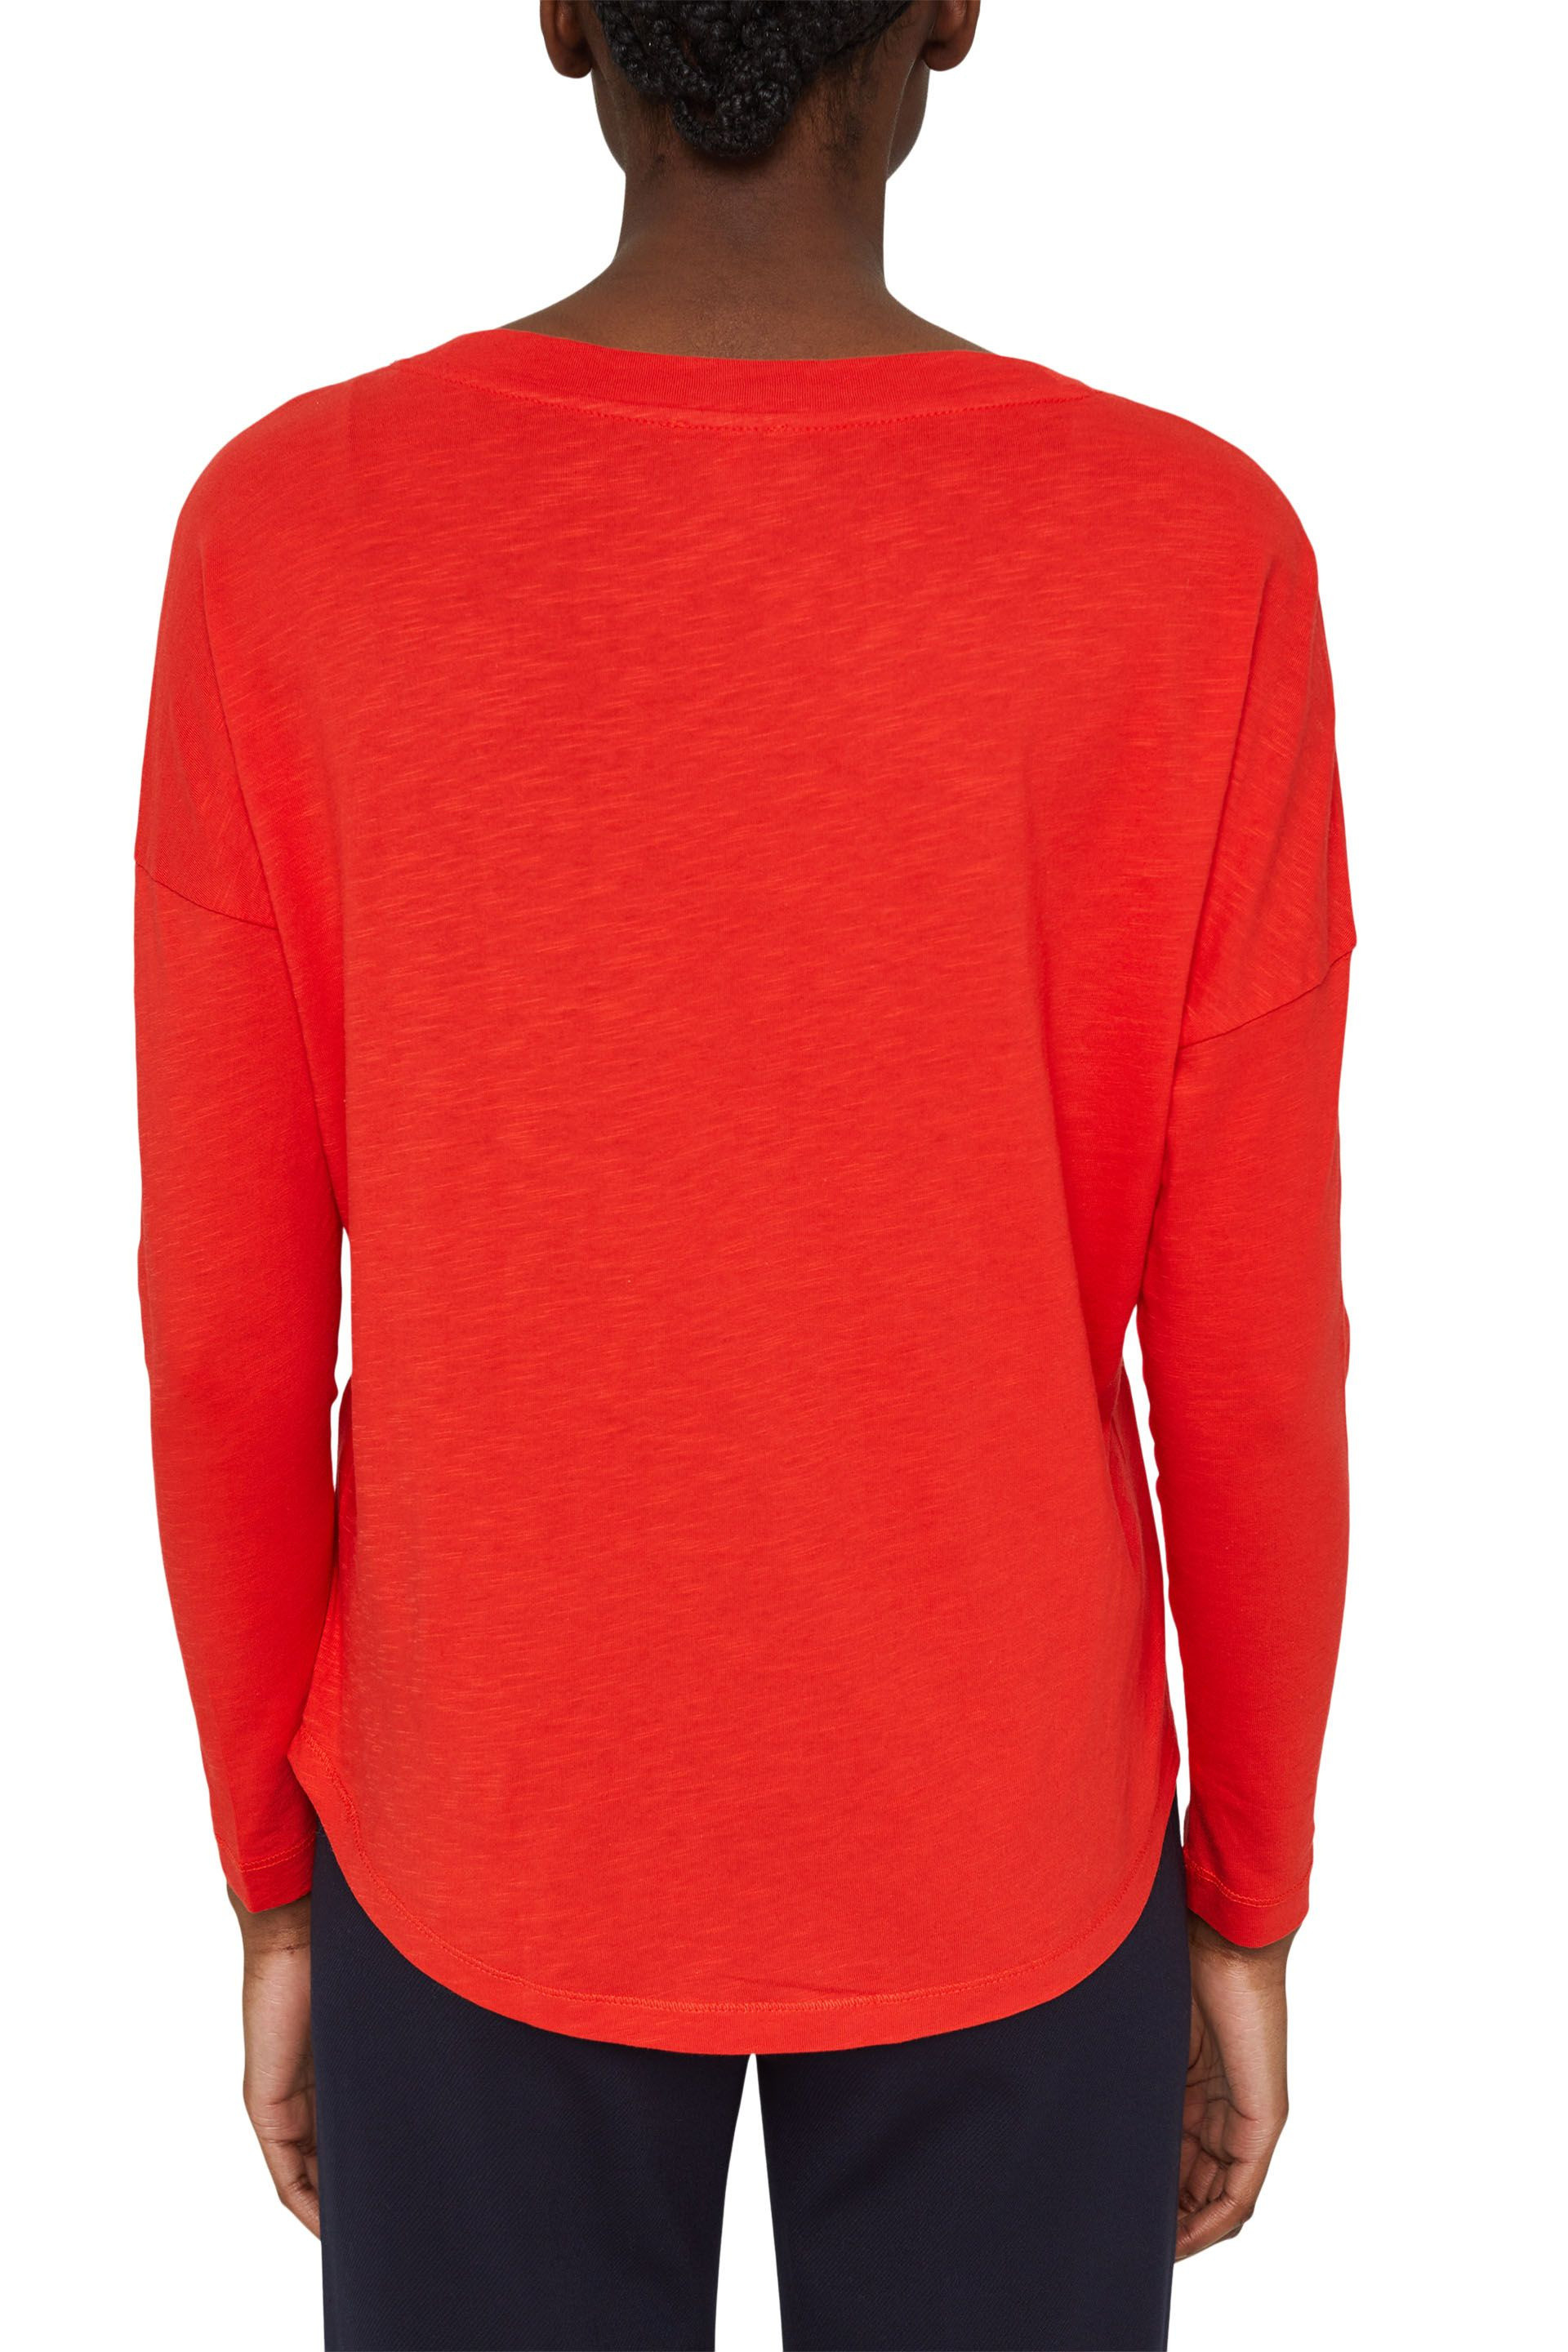 Long-sleeved T-shirt with pocket, Orange, large image number 2